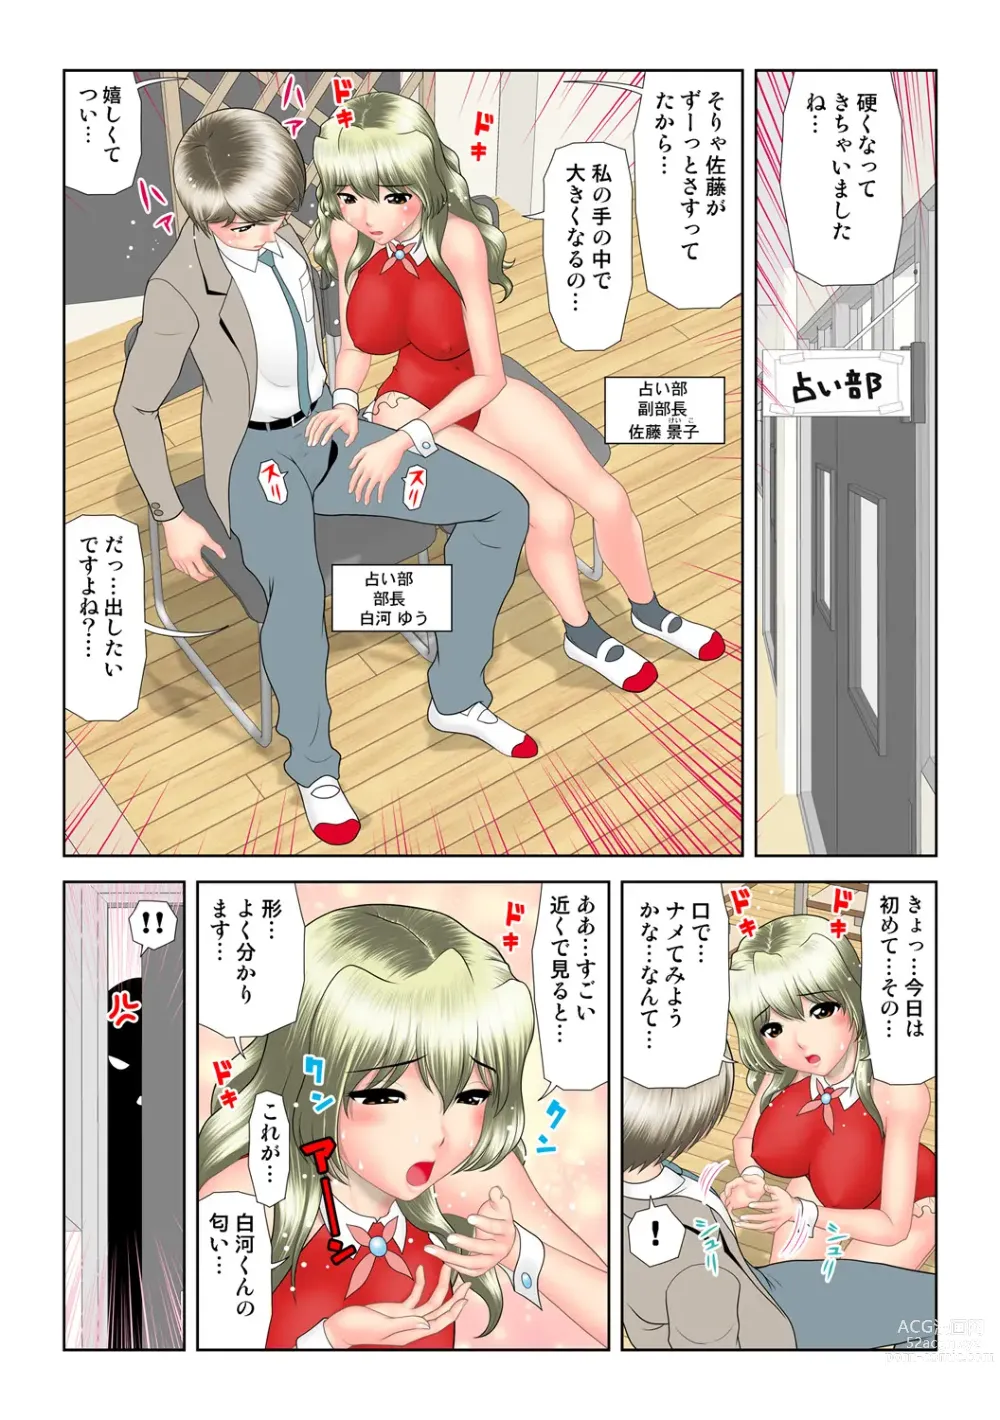 Page 106 of manga HiME-Mania Vol. 54